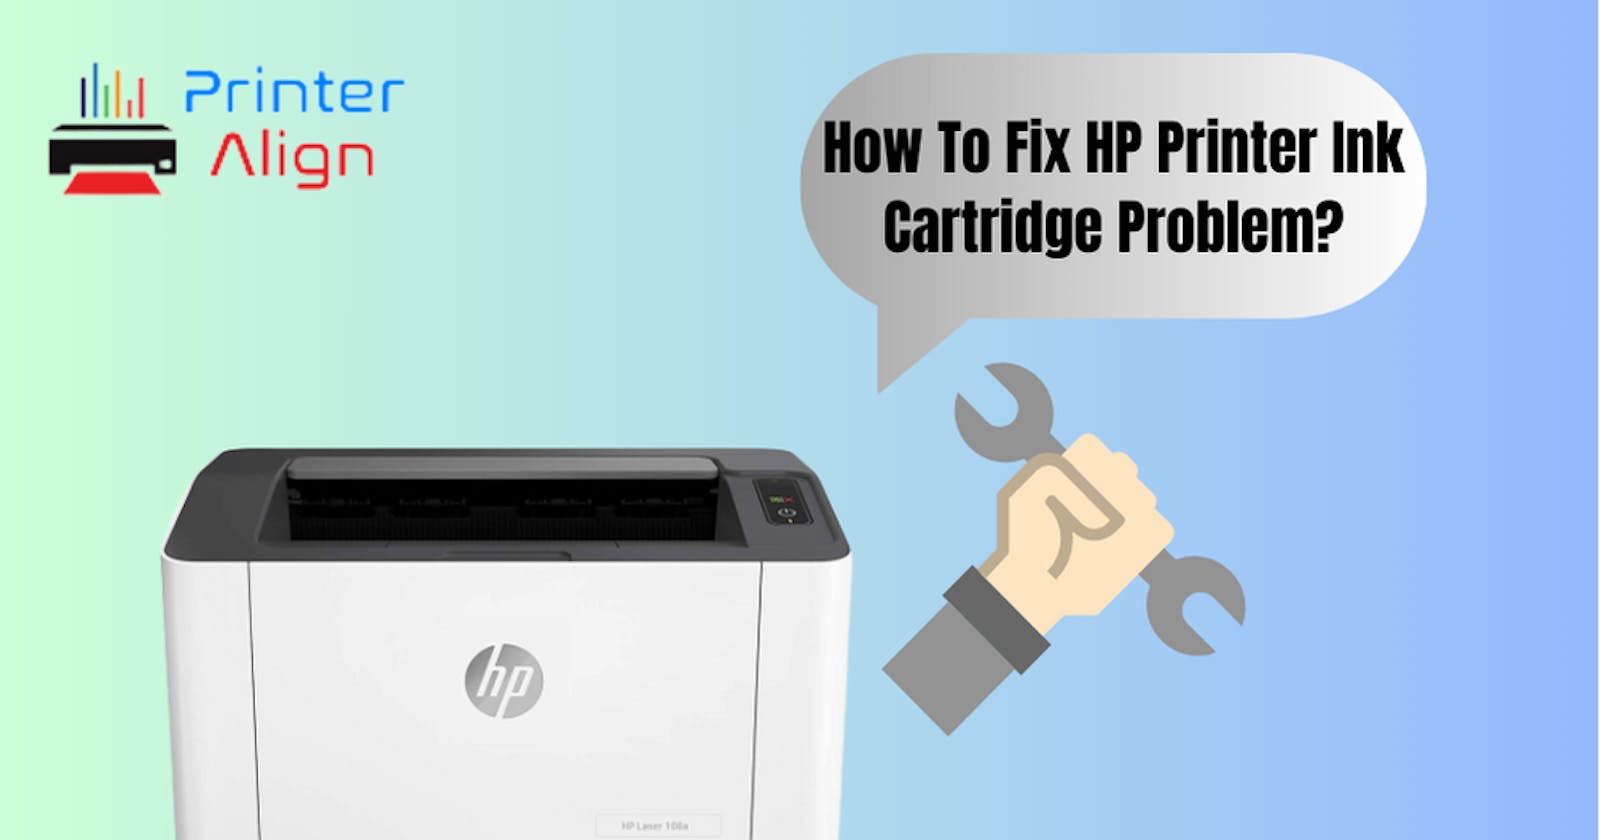 How To Fix HP Printer Ink Cartridge Problem?